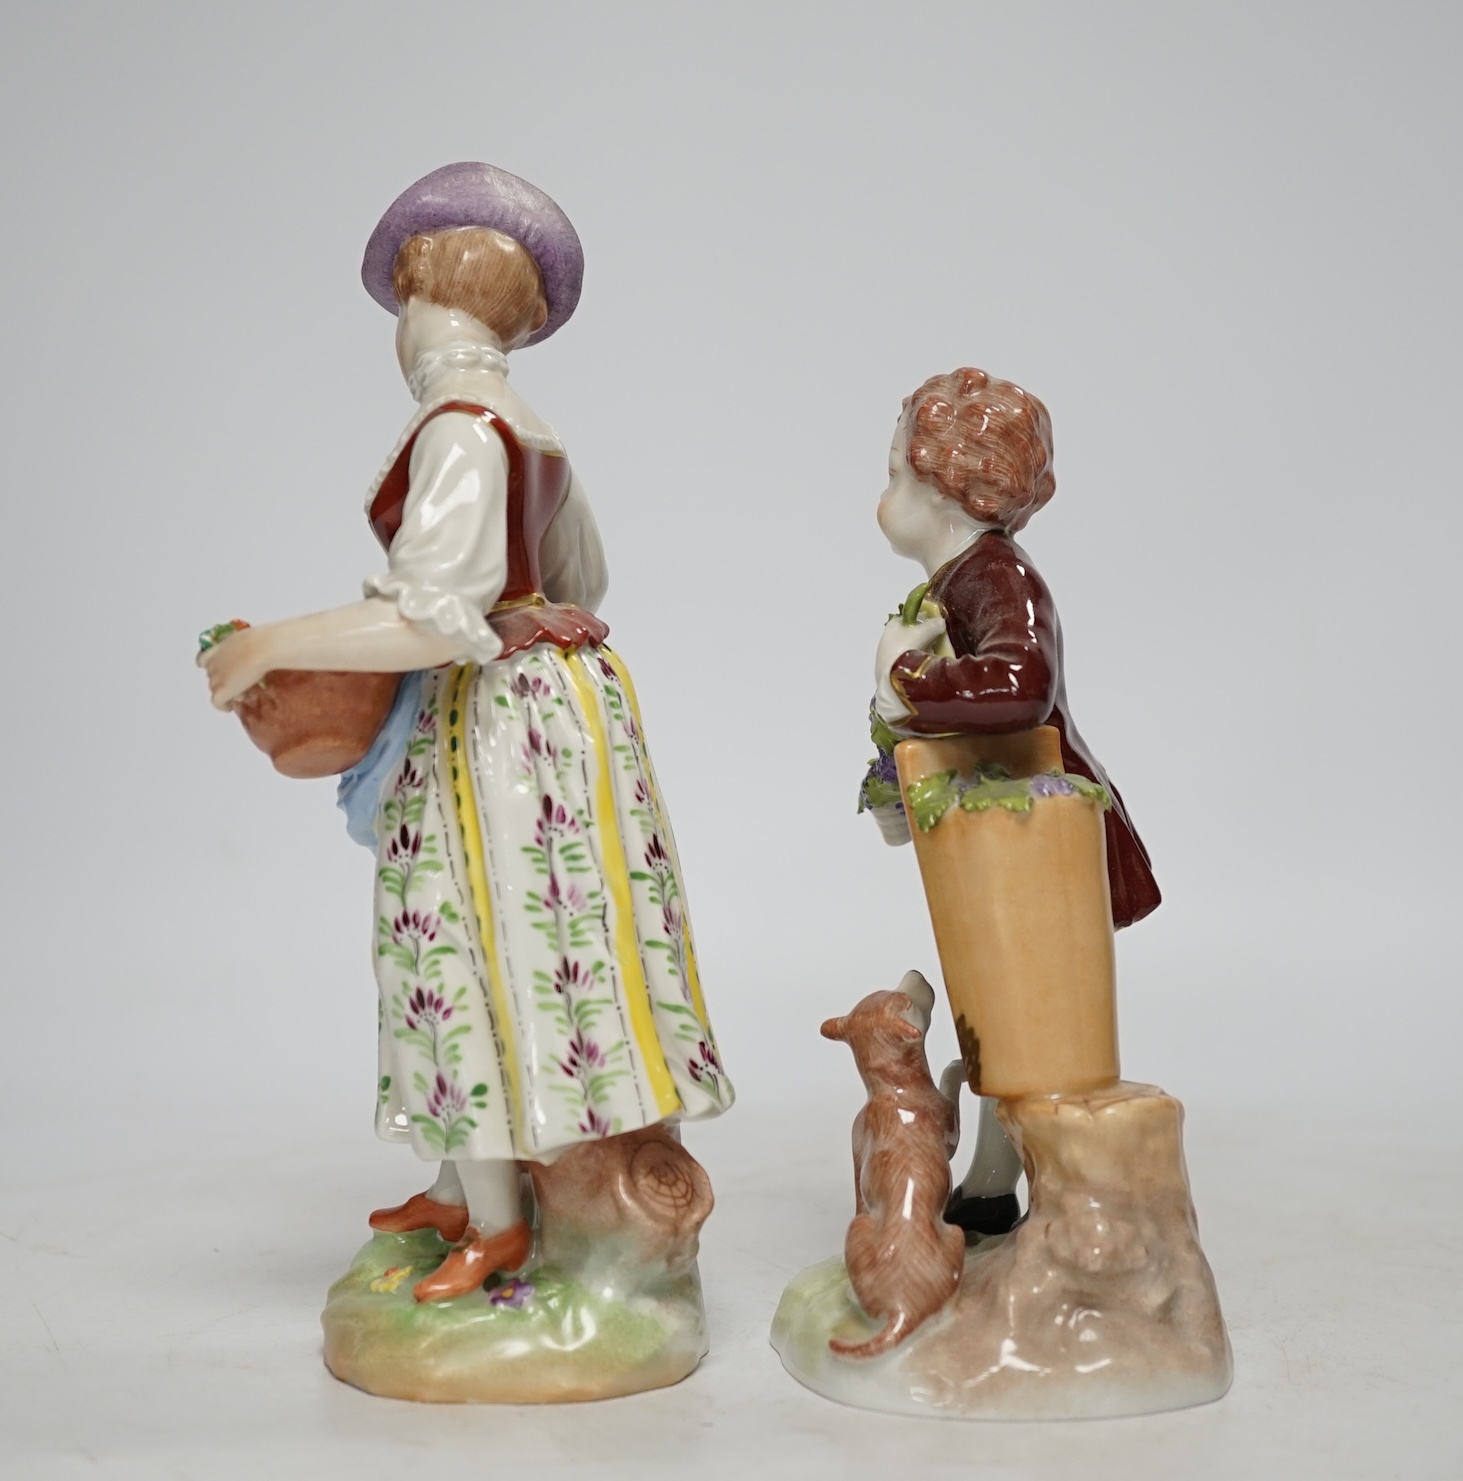 Two Dresden porcelain figures, tallest 19cm. Condition - fair to good